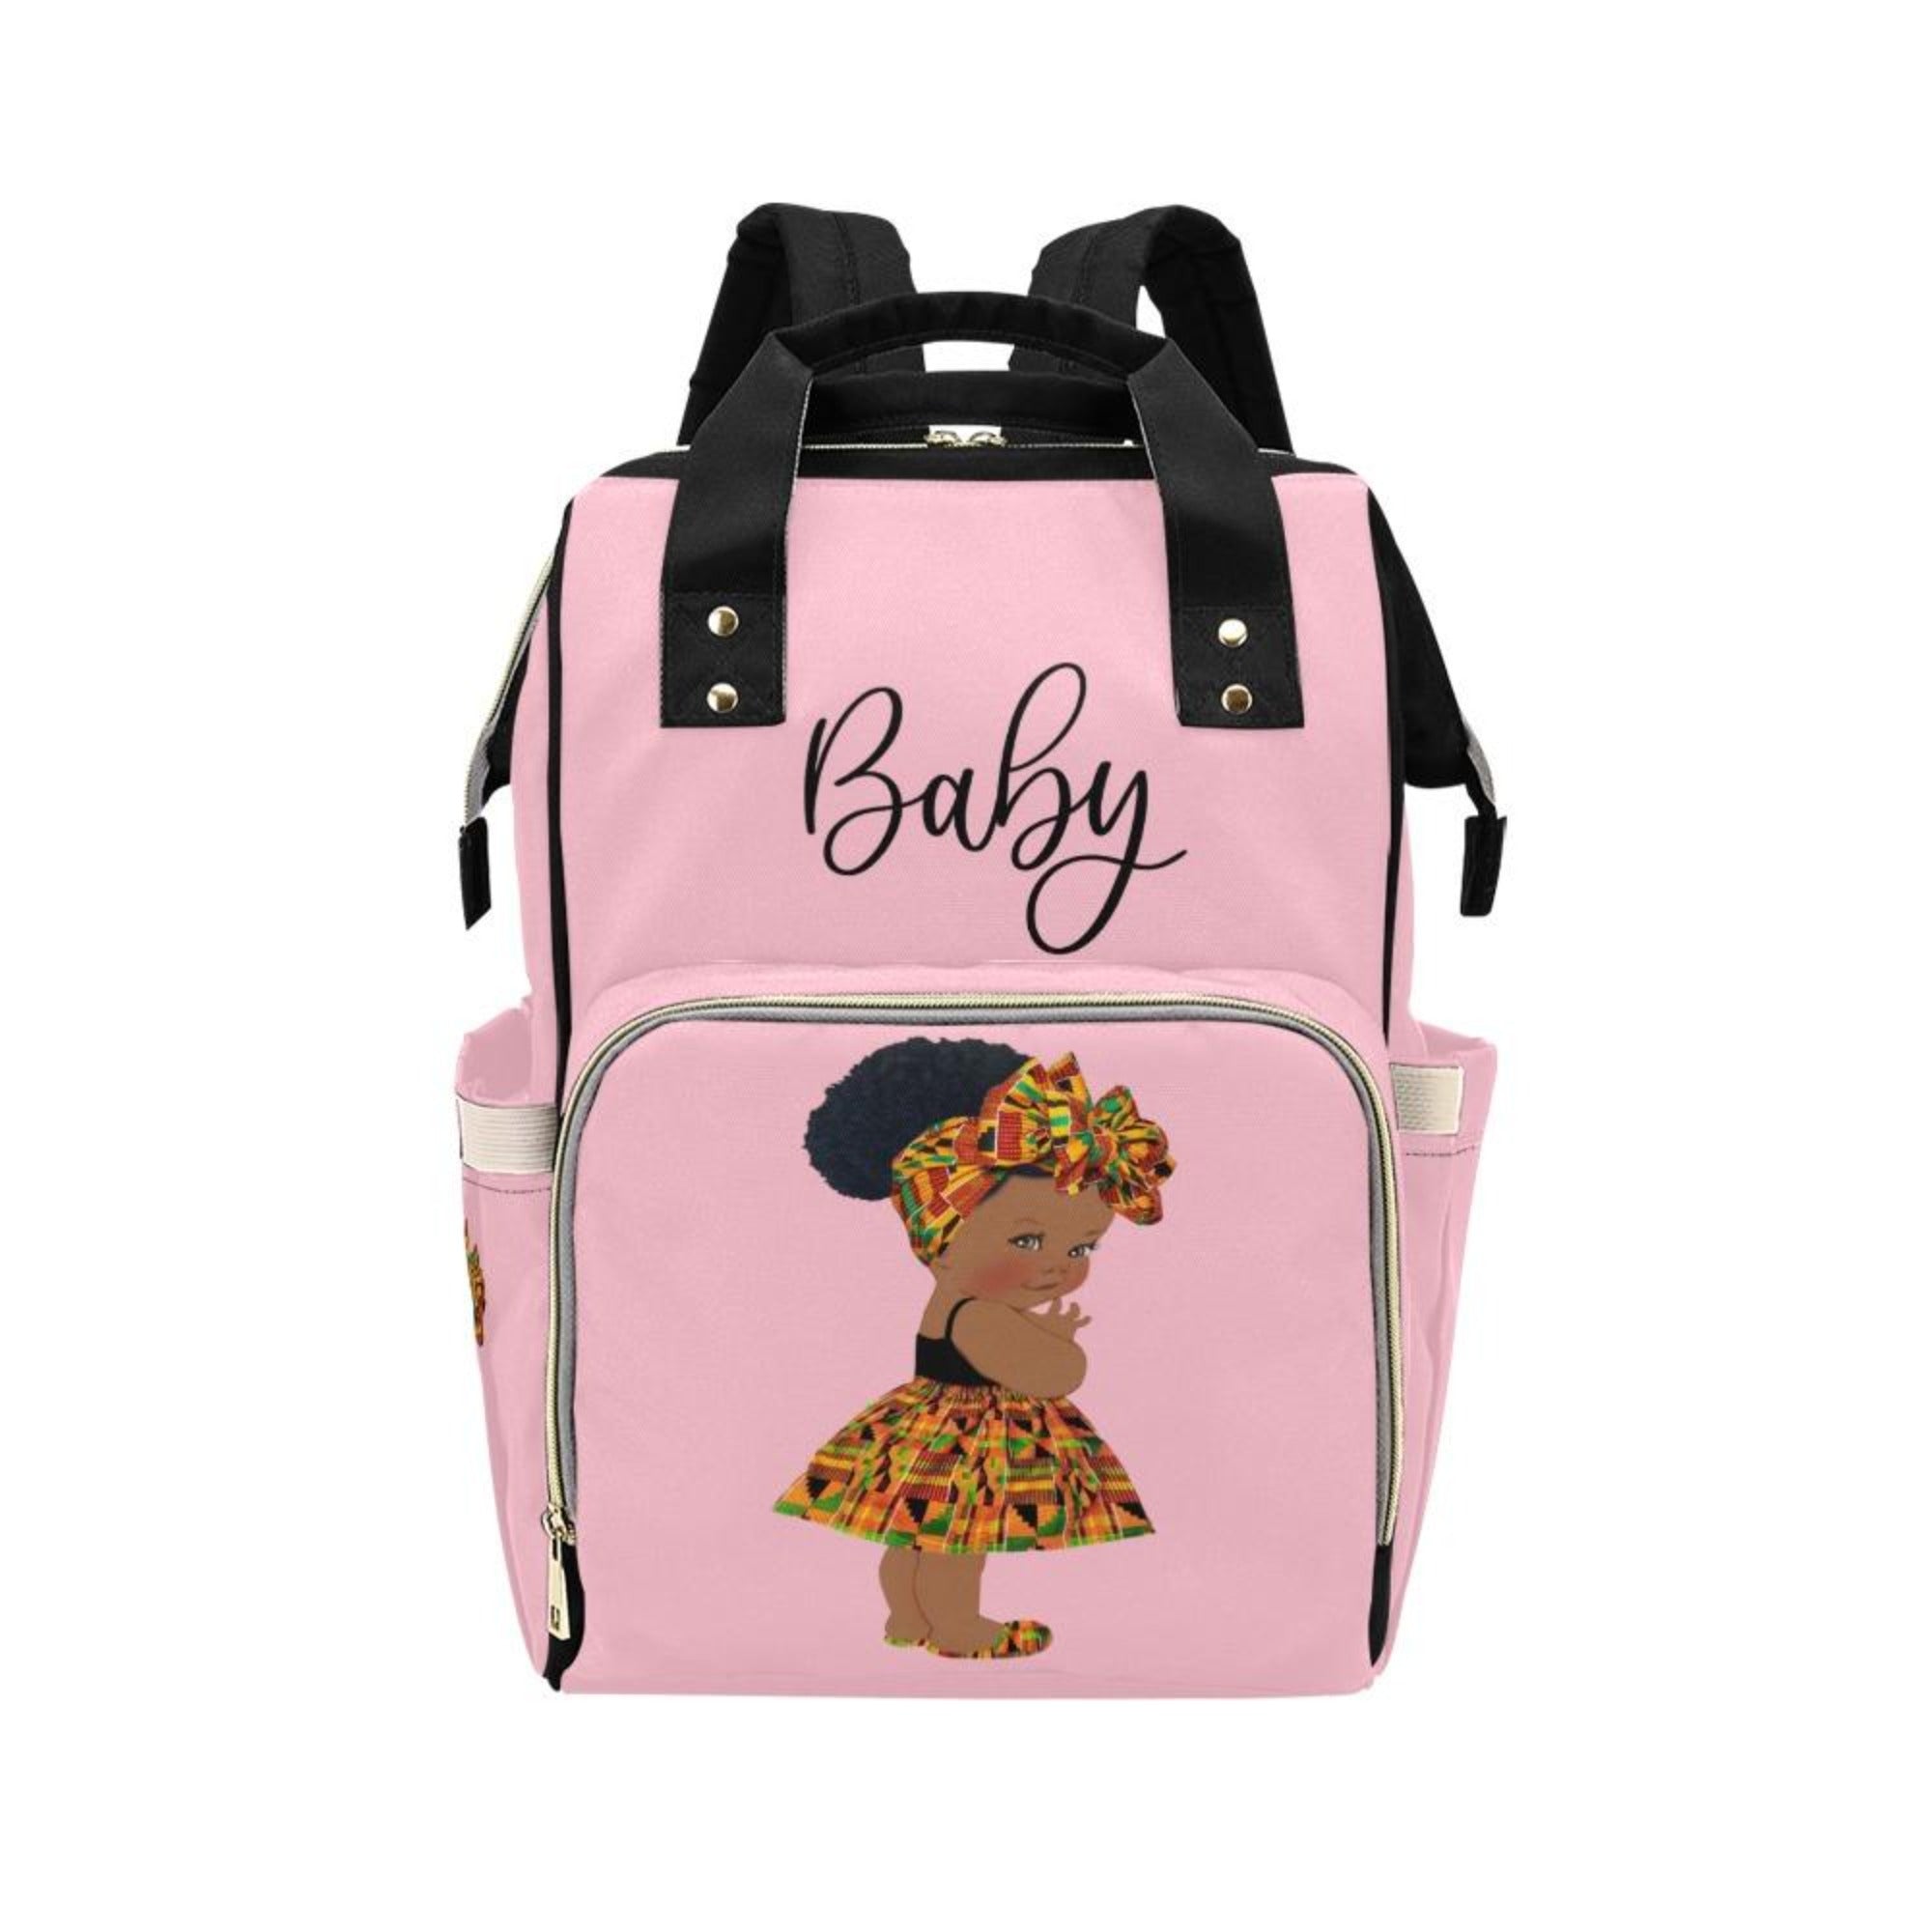 Designer Diaper Bag - Ethnic African American Baby Girl - Powder Pink Multi-Function Backpack